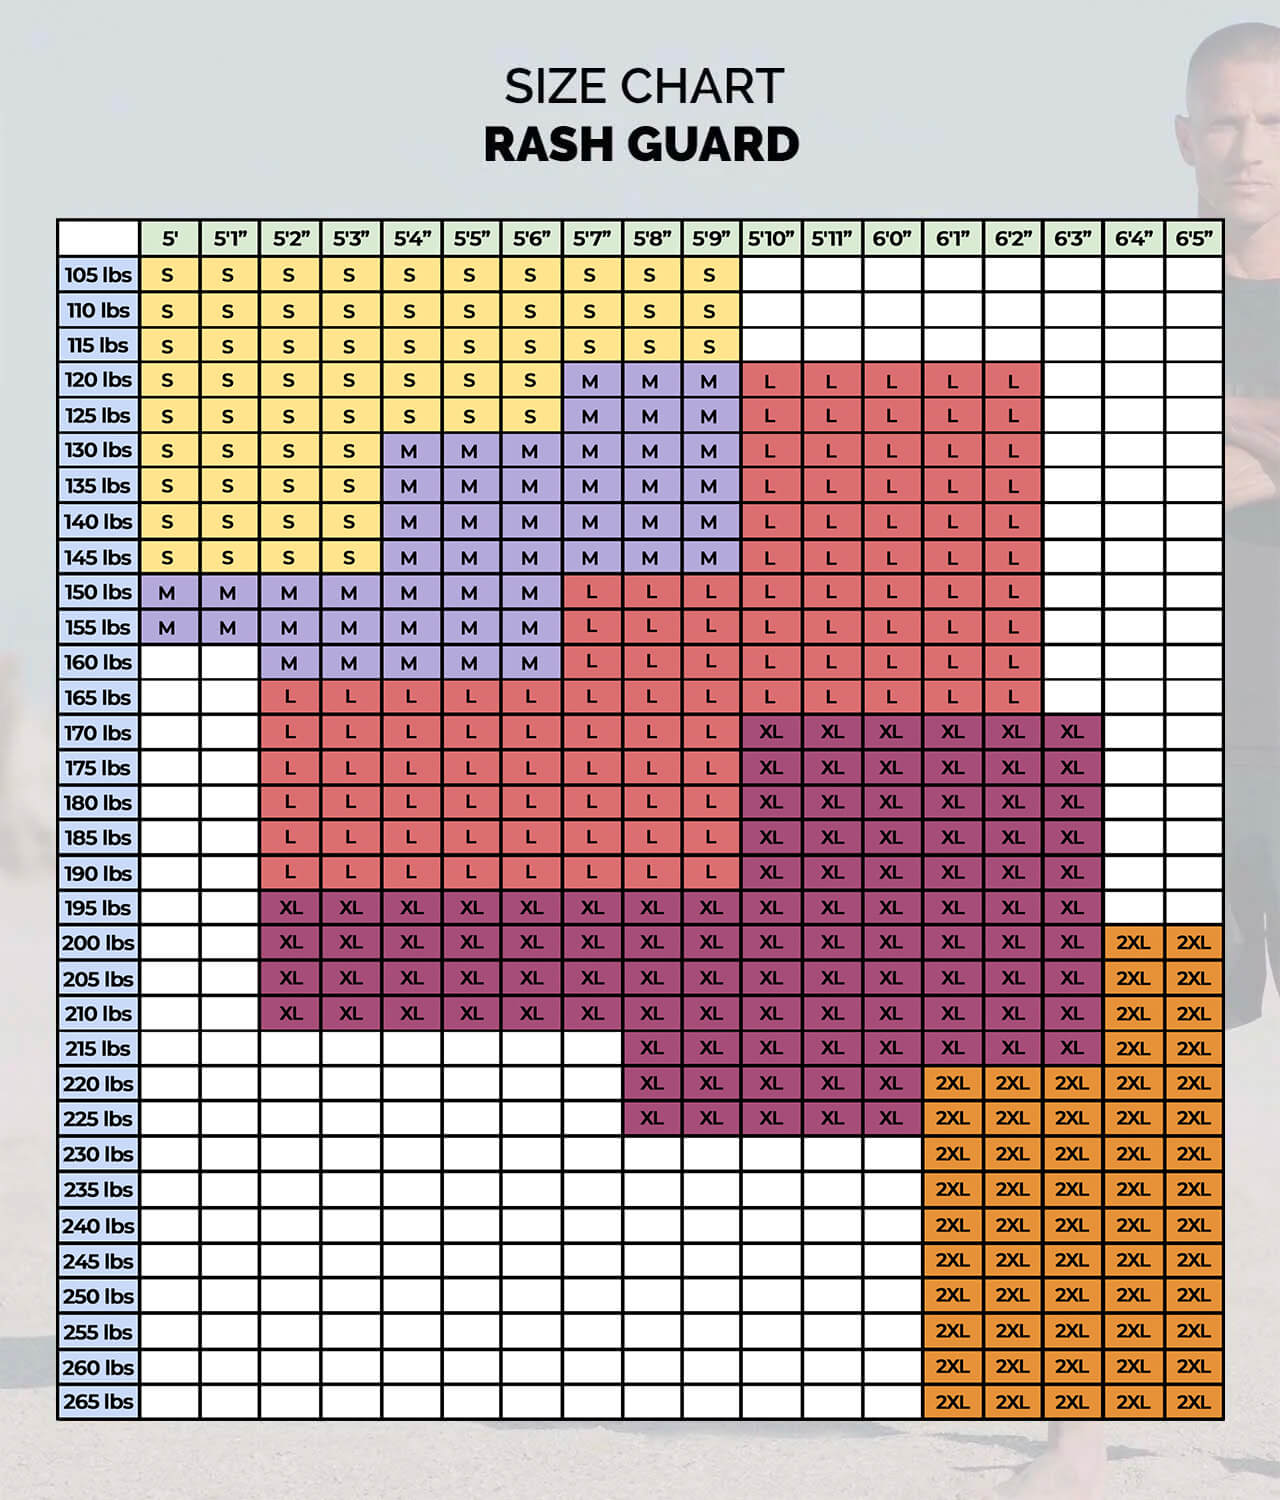 Elite Sports Men's Standard Red Short Sleeve Jiu Jitsu BJJ Rash Guard Size Guide